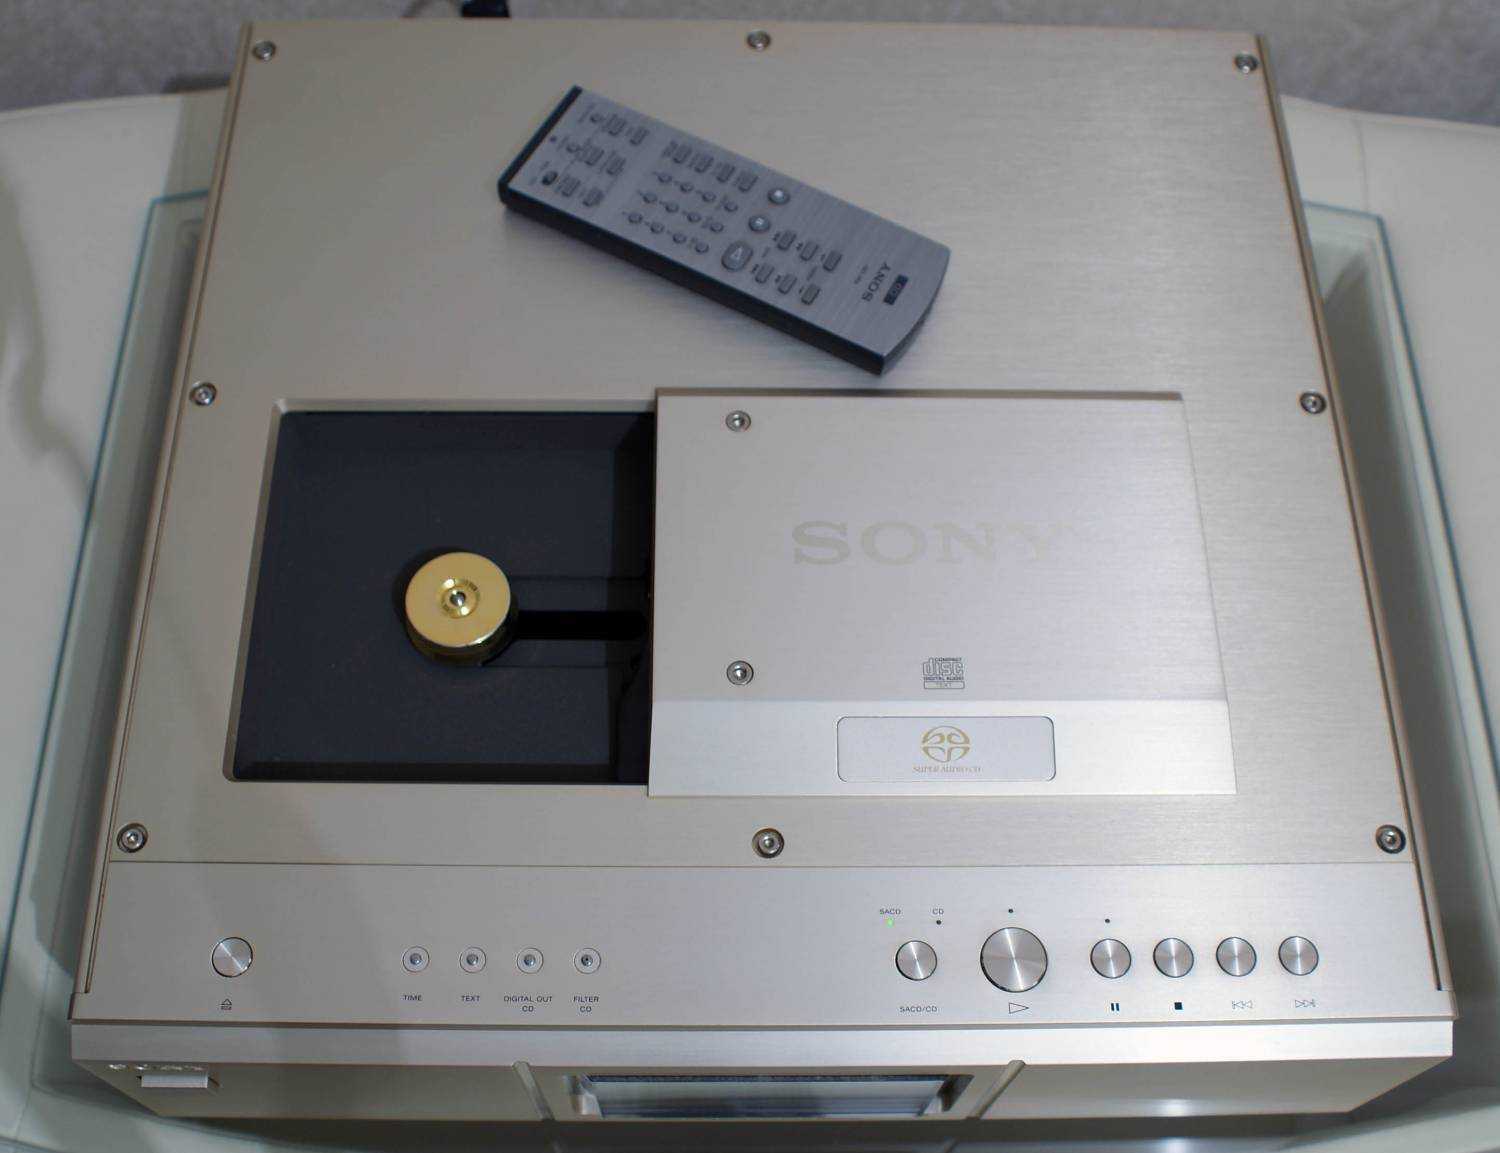 Sony scd-1, scd-777es service manual - free download